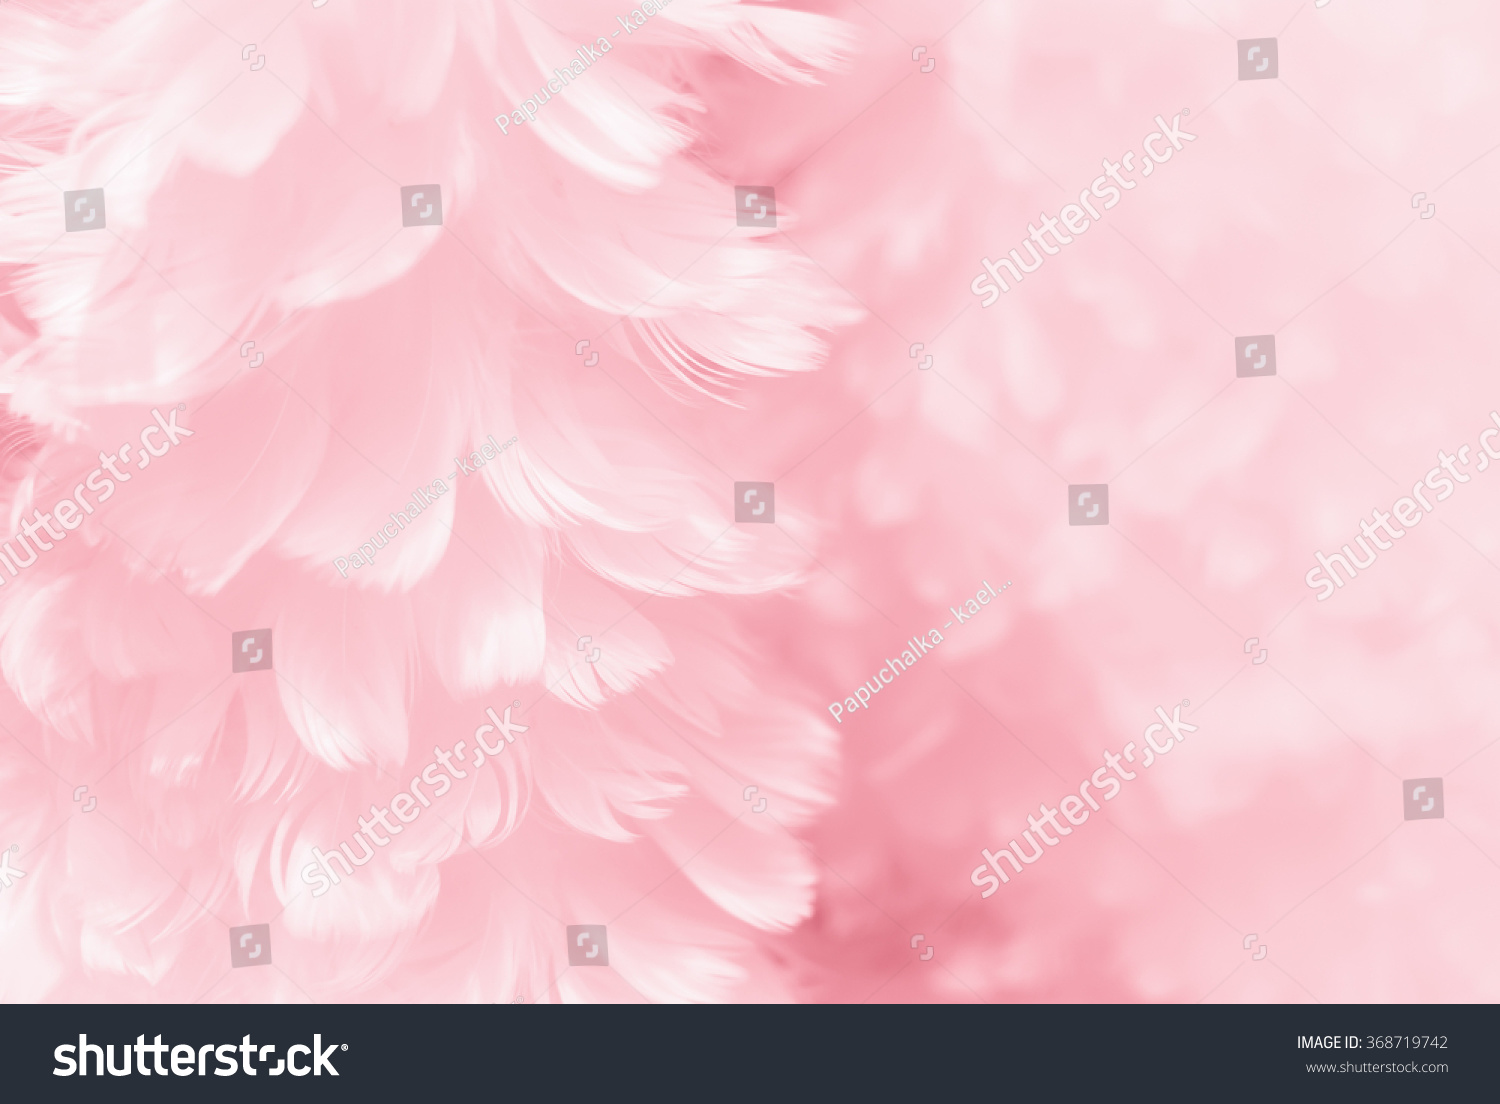 Fluffy Mauve Pink Feather Fashion Design Stock Photo 